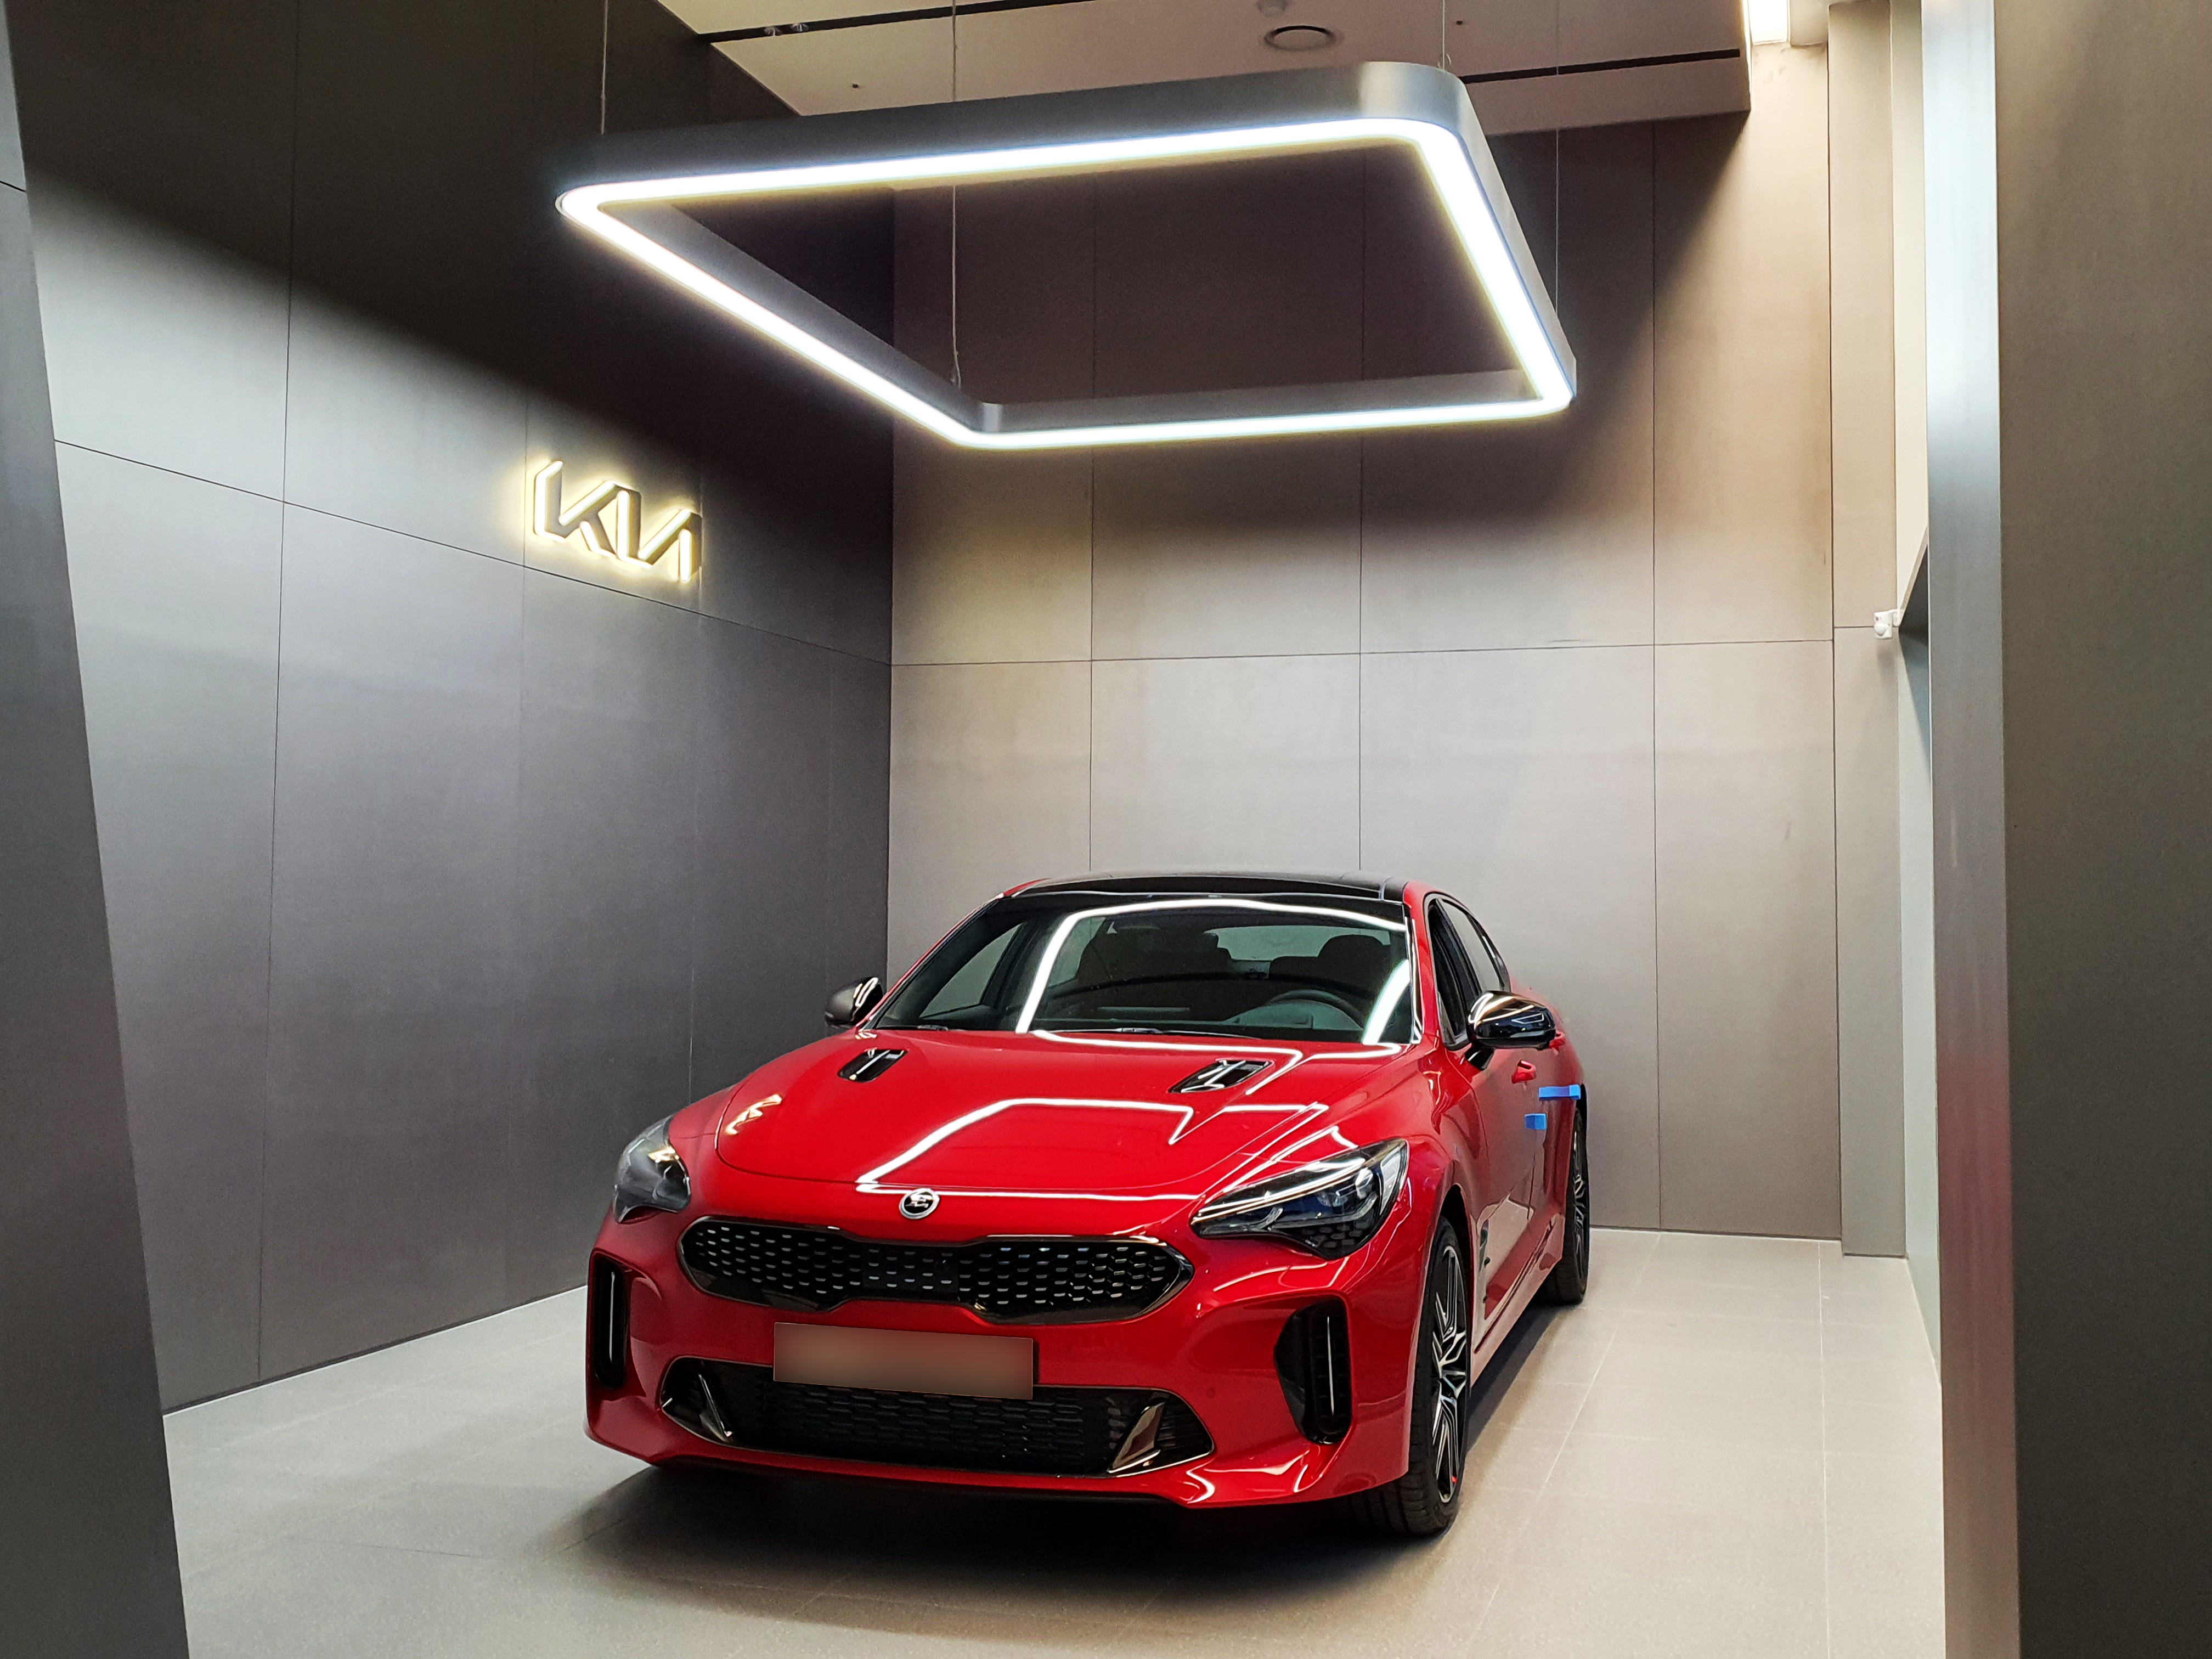 Kia Motors Showroom Korea 1